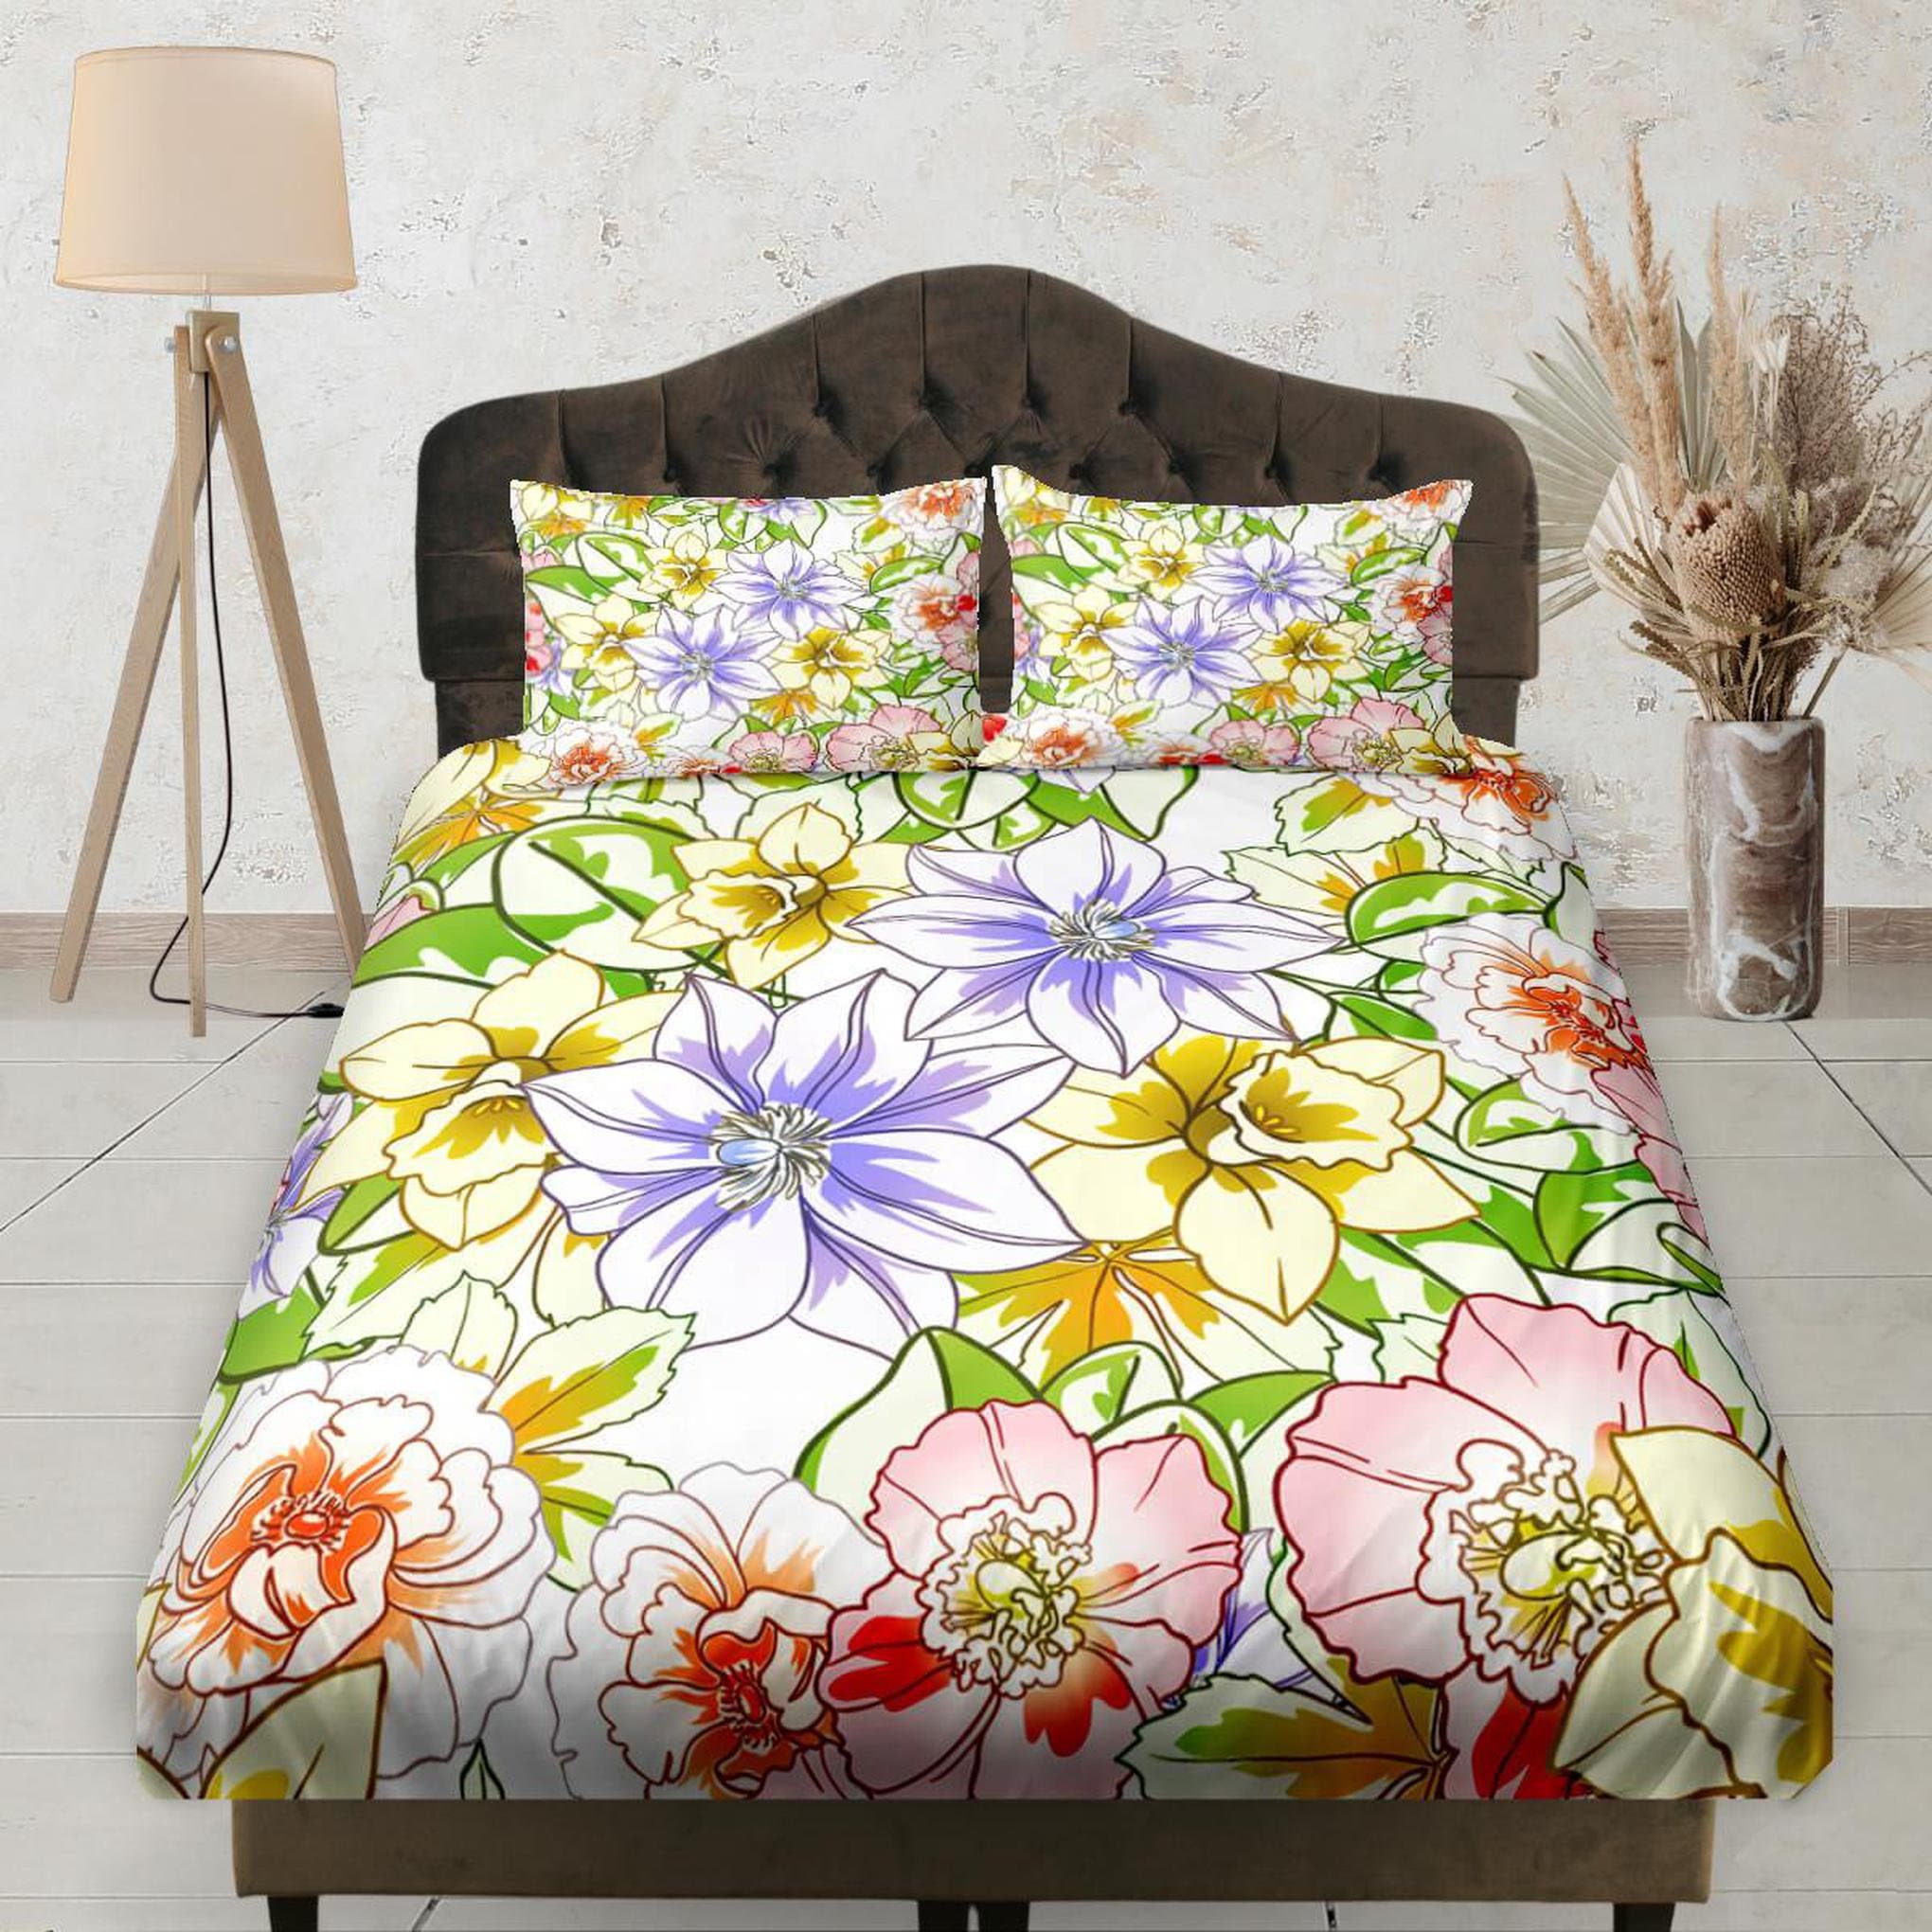 daintyduvet Colorful Summer Flowers Fitted Bedsheet, Floral Prints, Aesthetic Boho Bedding Set Full, Dorm Bedding, Crib Sheet, Shabby Chic Bedding